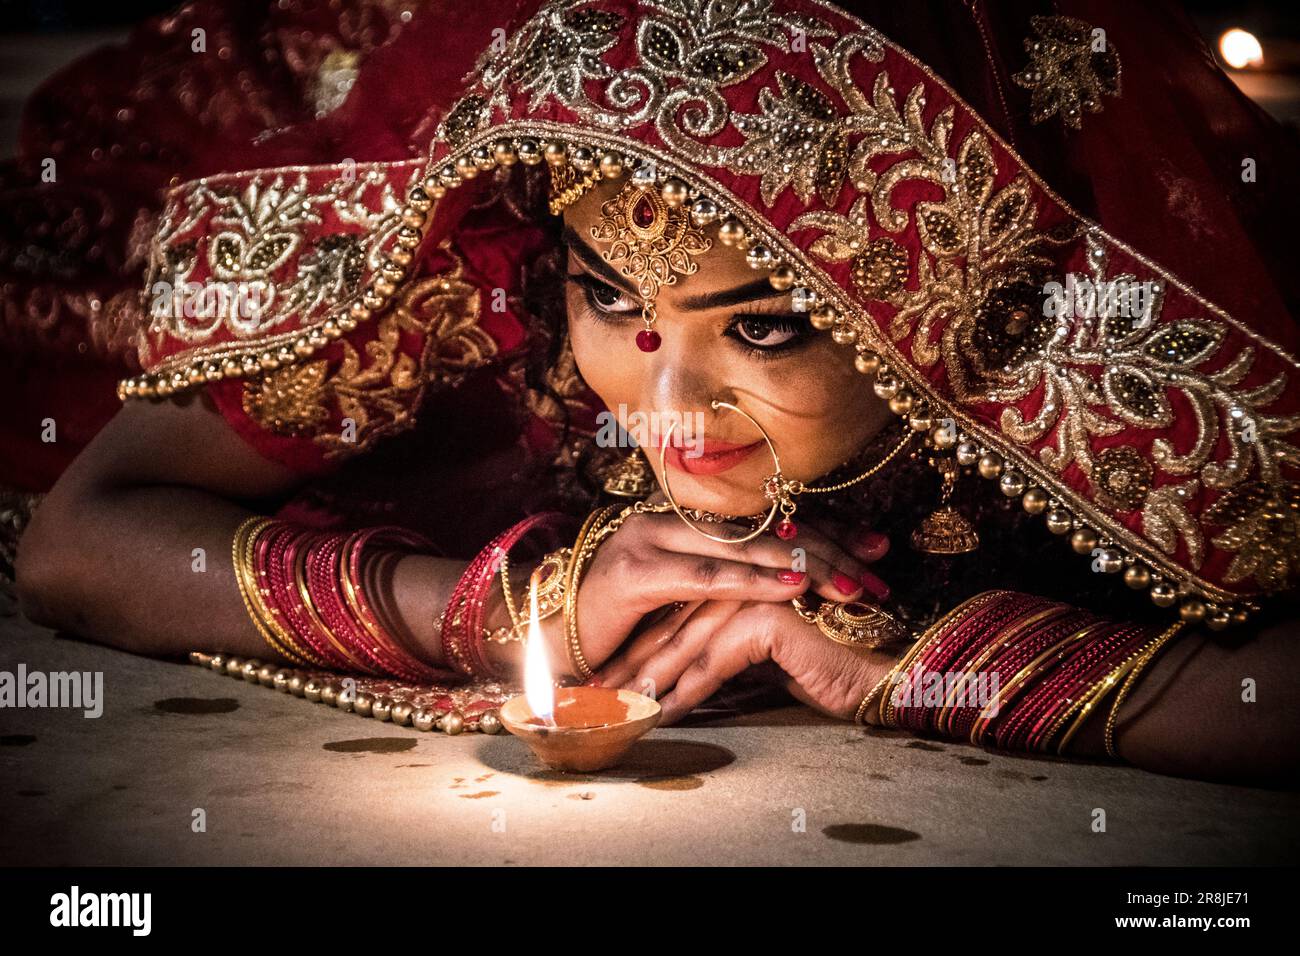 50+ South Indian Bridal Portraits We Have Fallen In Love With! | Indian  wedding poses, Indian wedding photography poses, Indian wedding couple